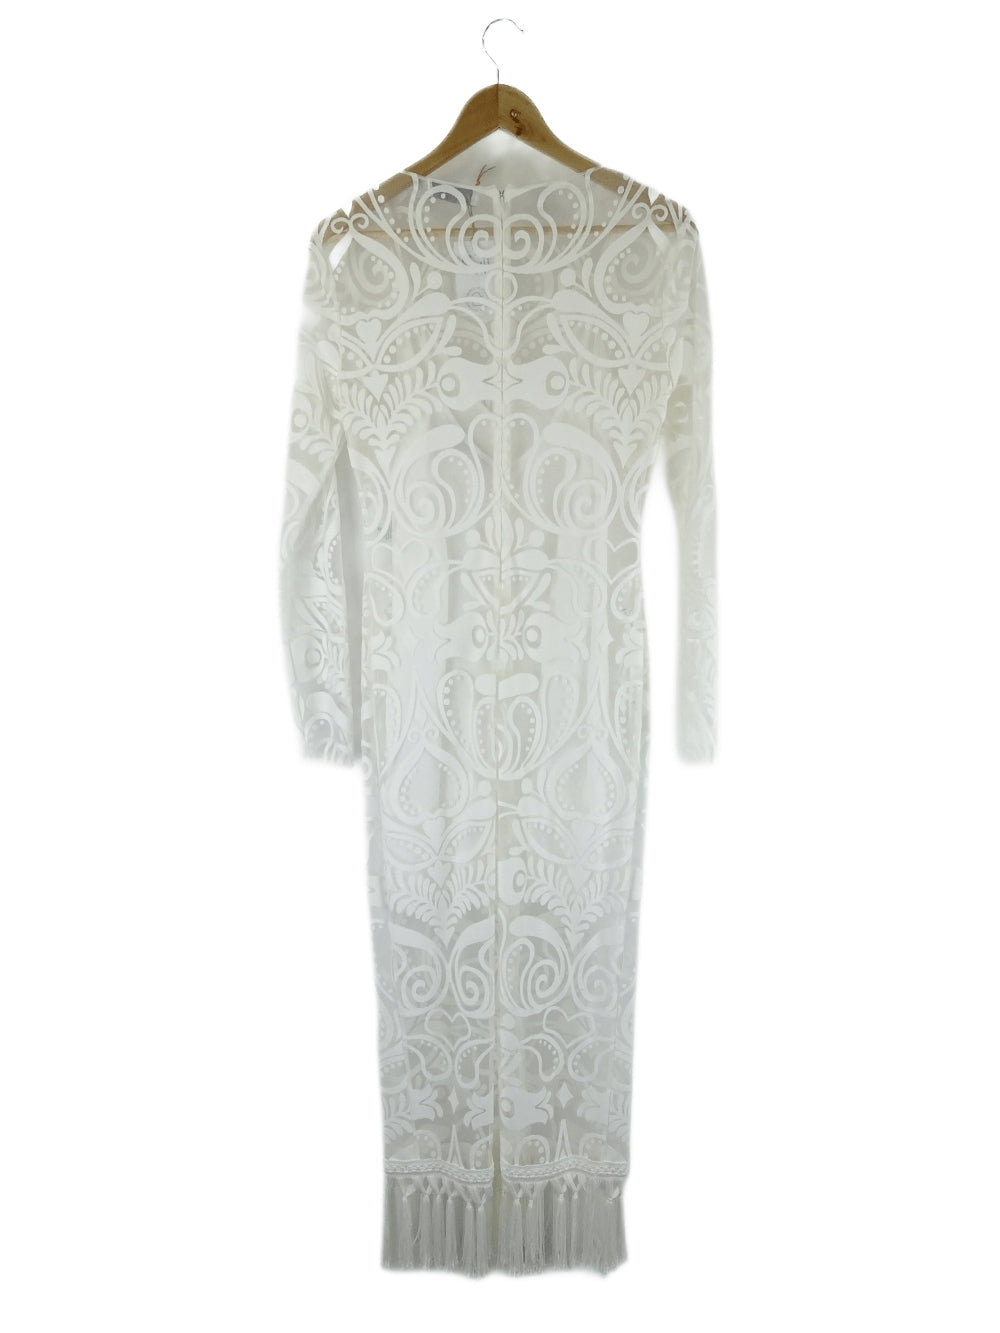 Alice McCall White Lace Dress 10